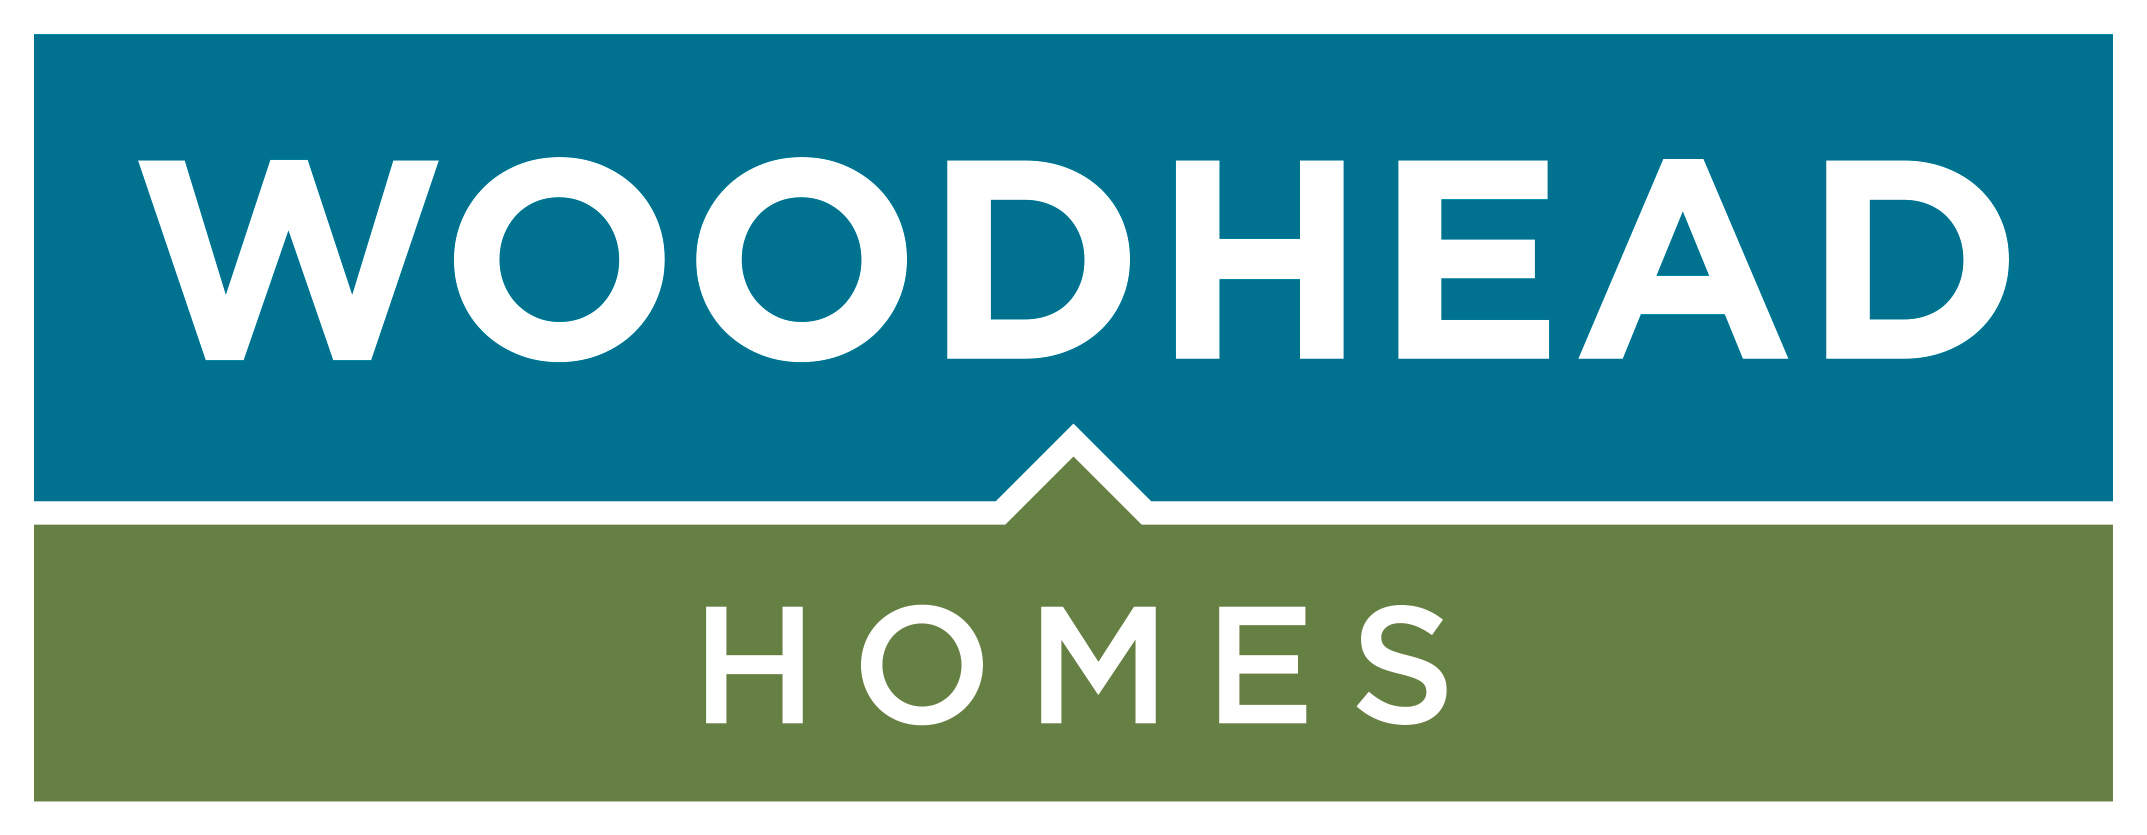 Woodhead Homes website